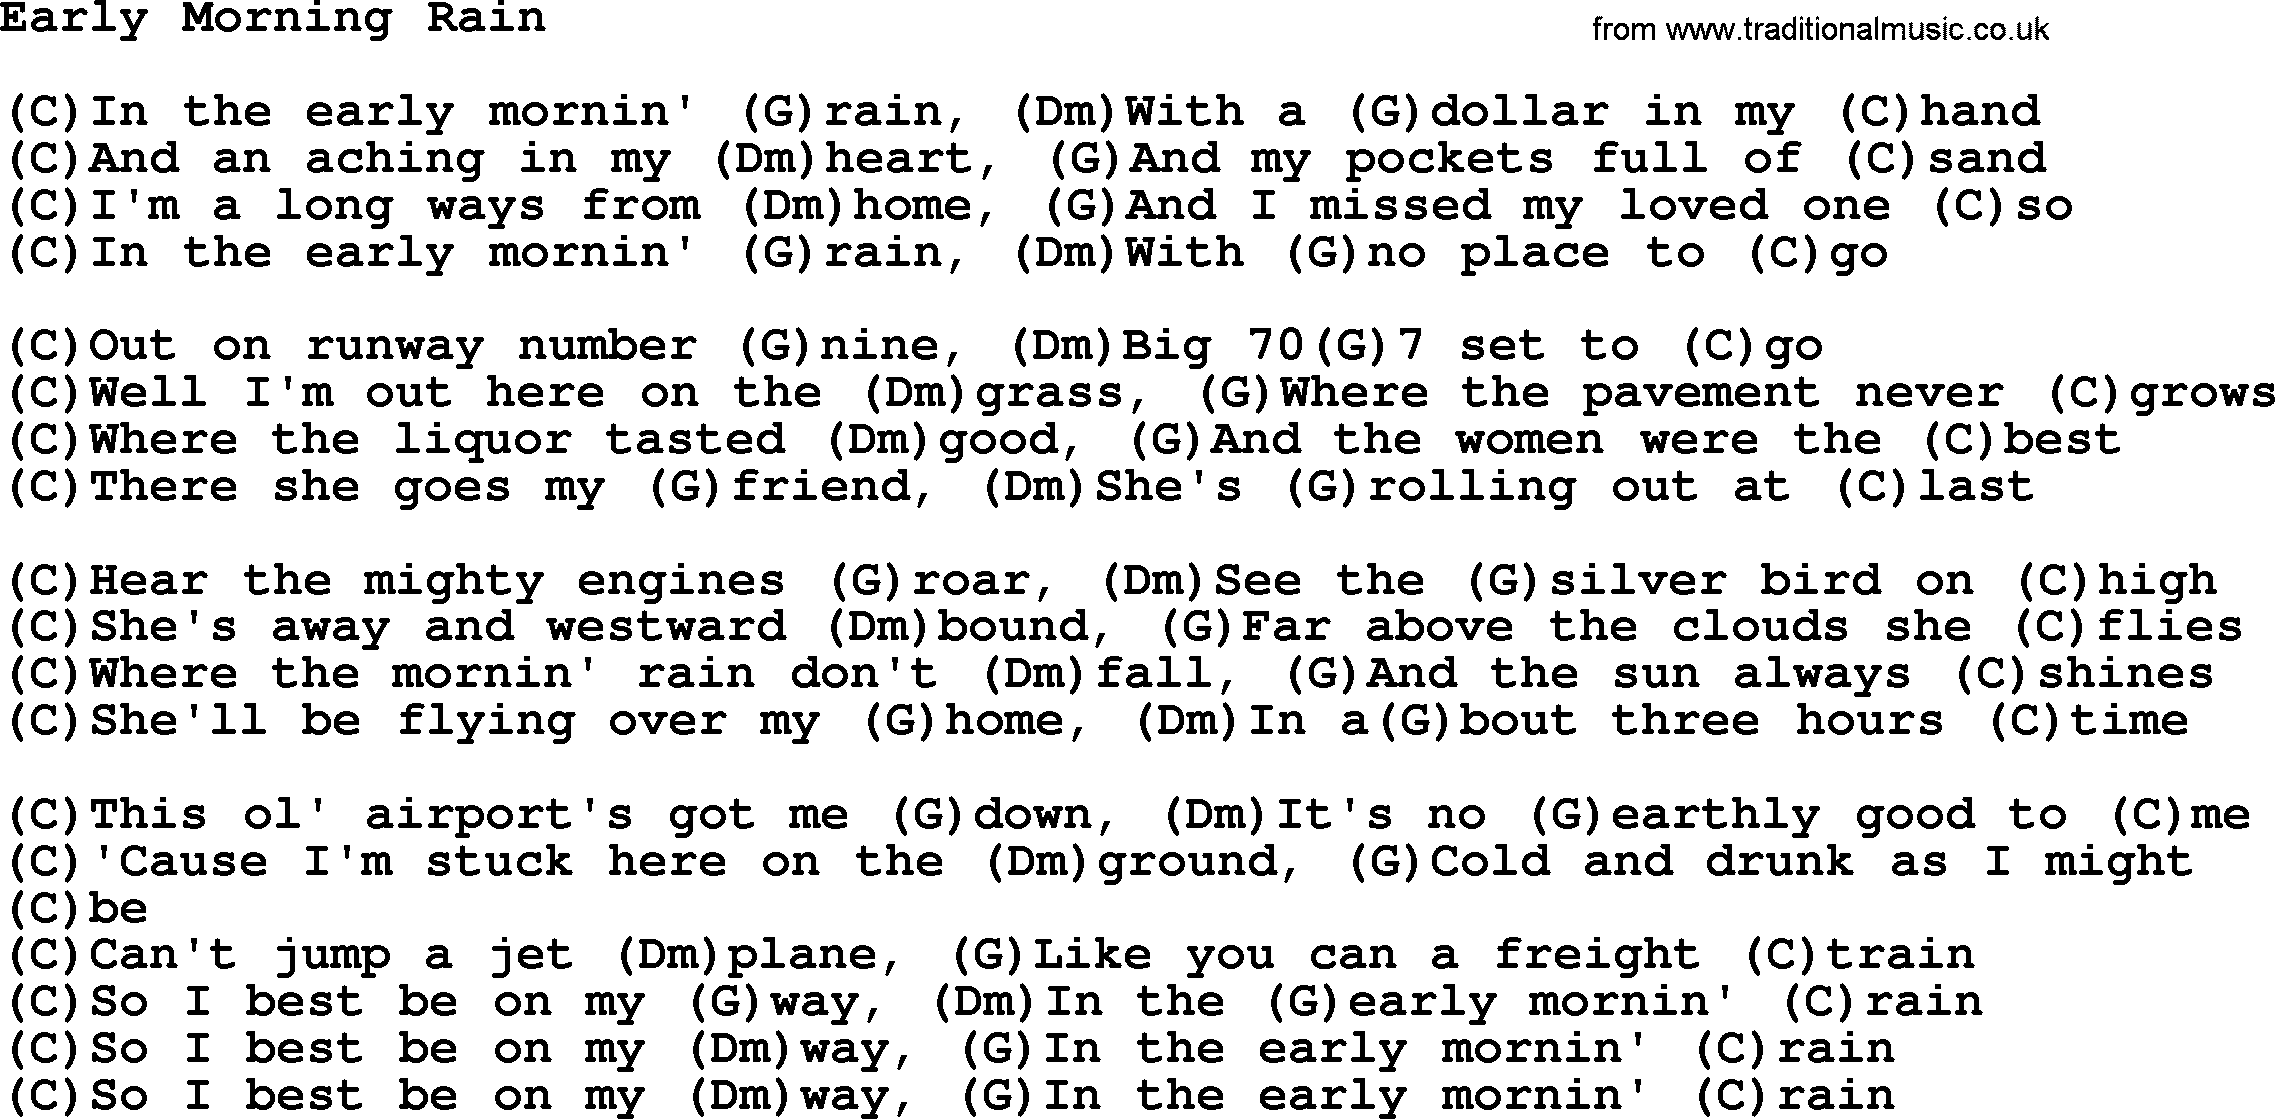 Early Morning Rain, by Elvis Presley - lyrics and chords